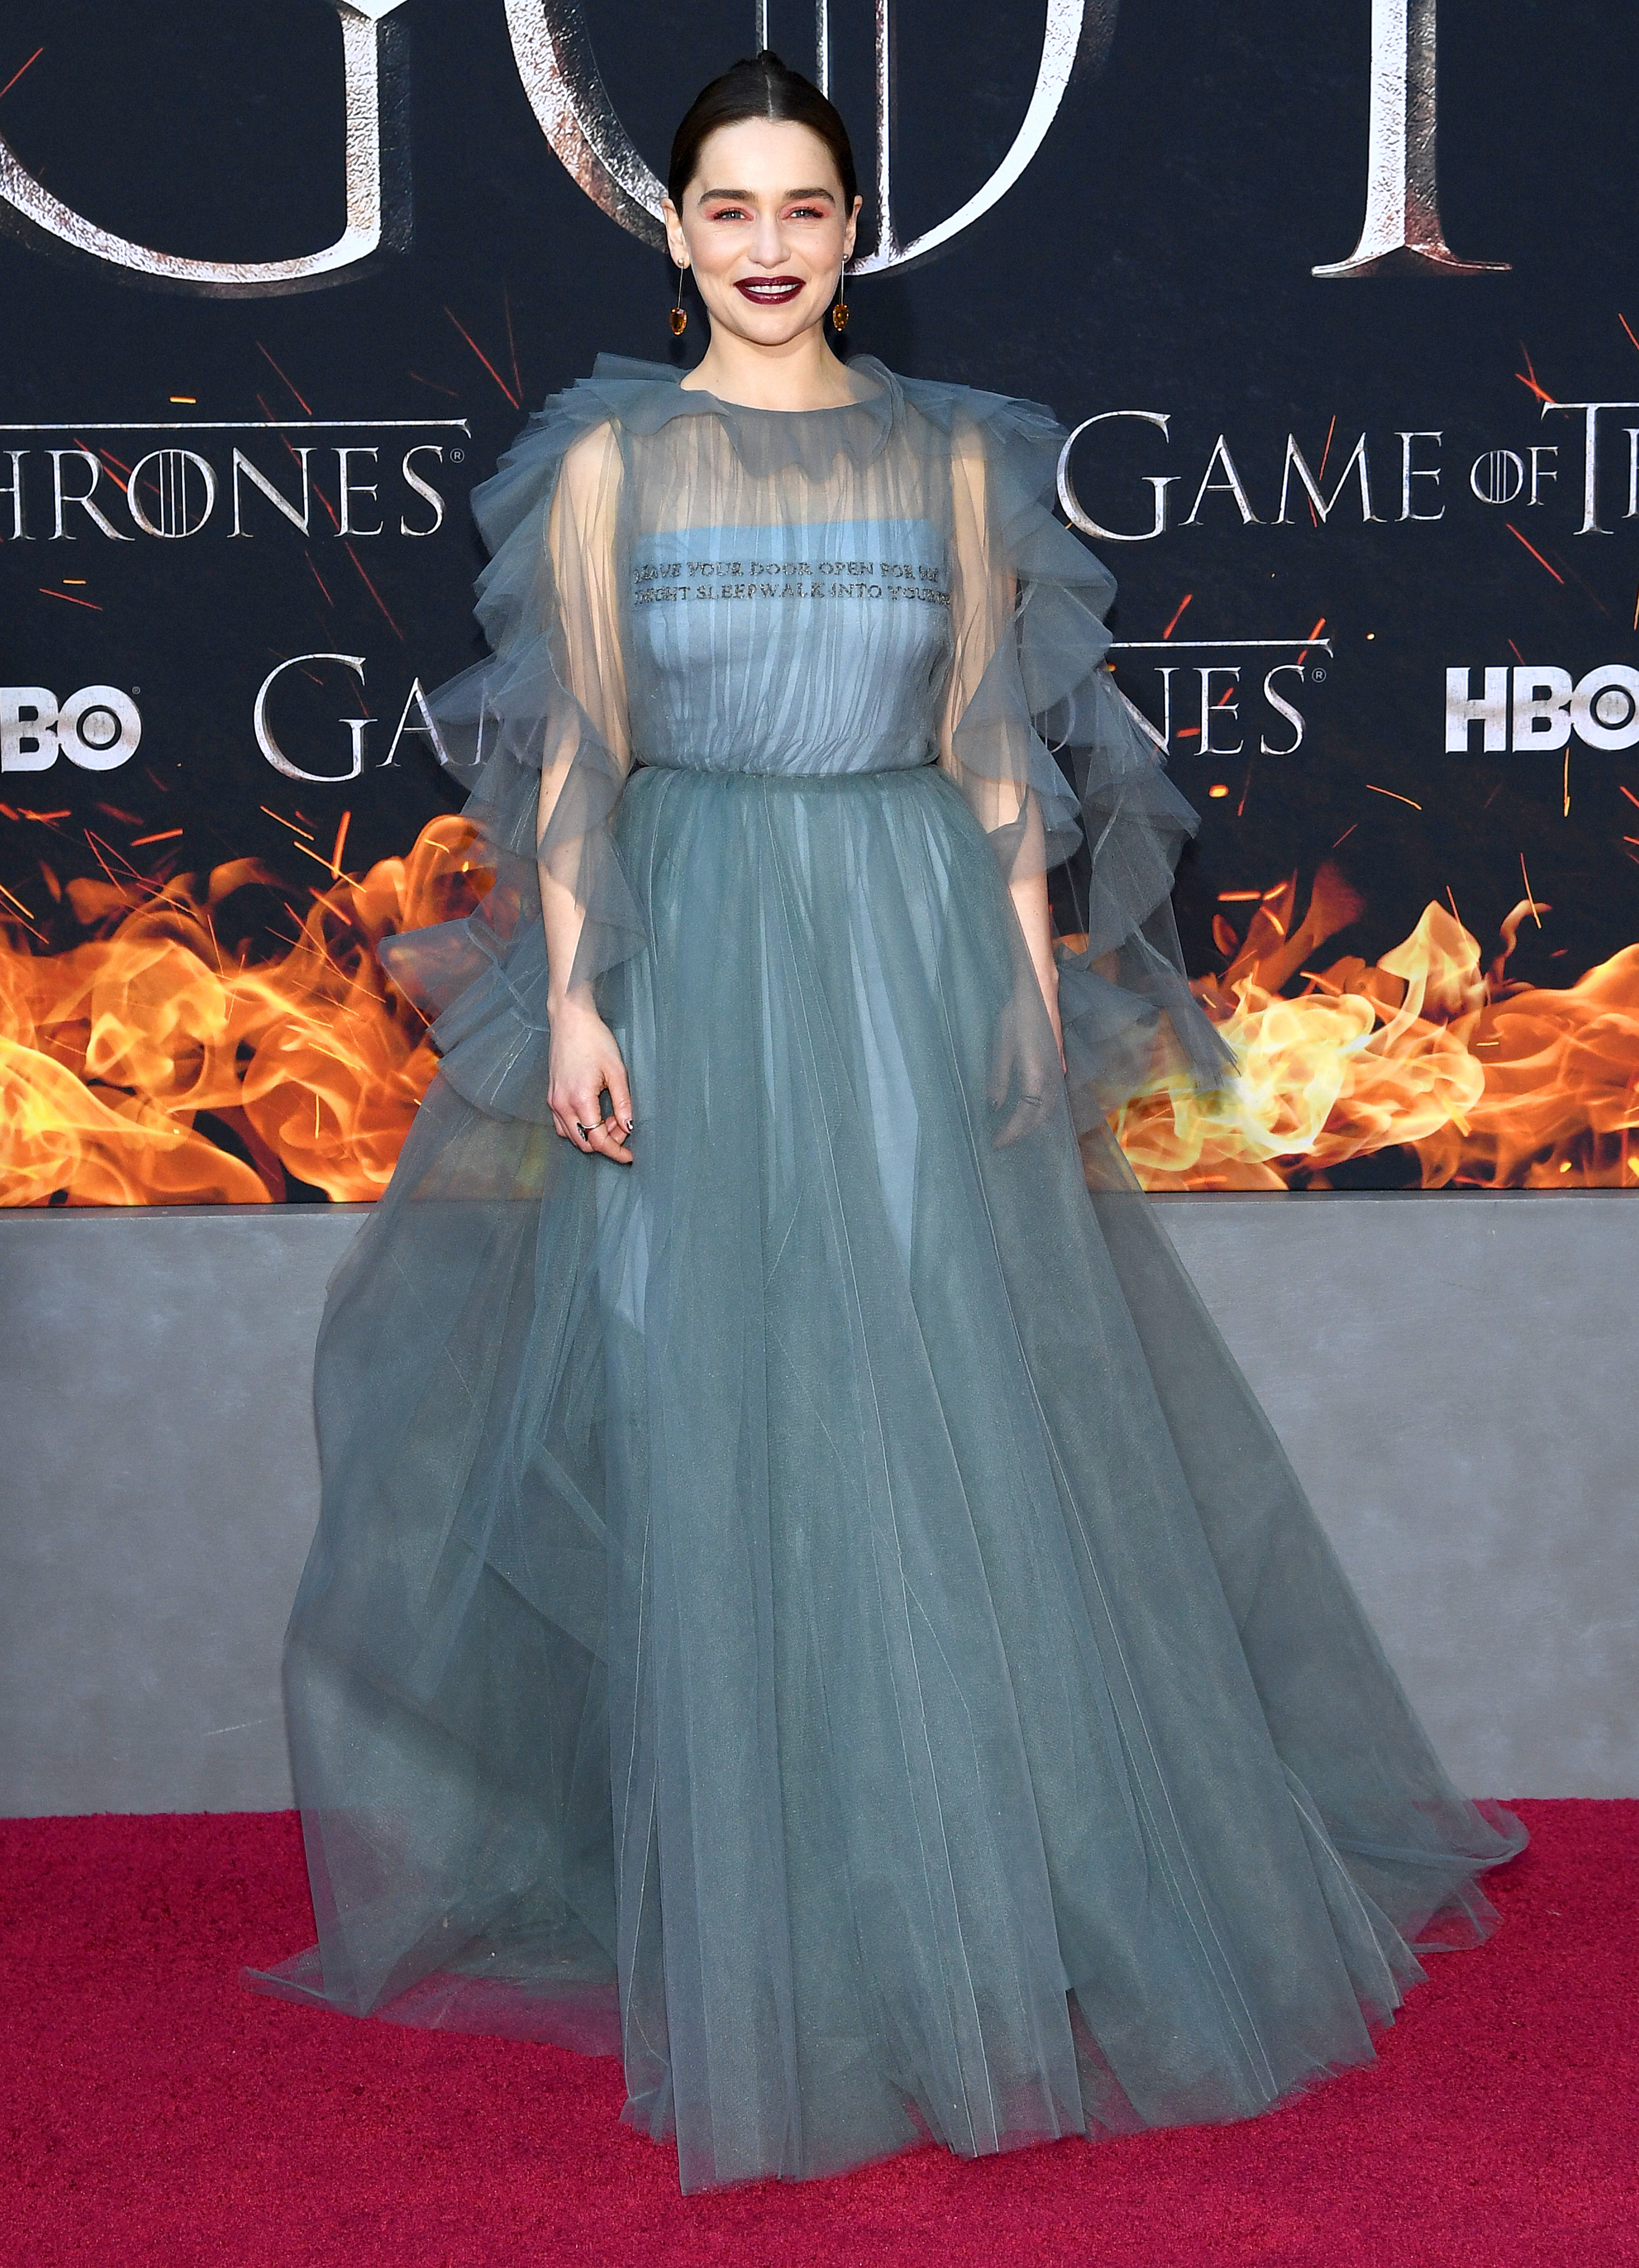 Emilia Clarke na premiere de Game Of Thrones em NY